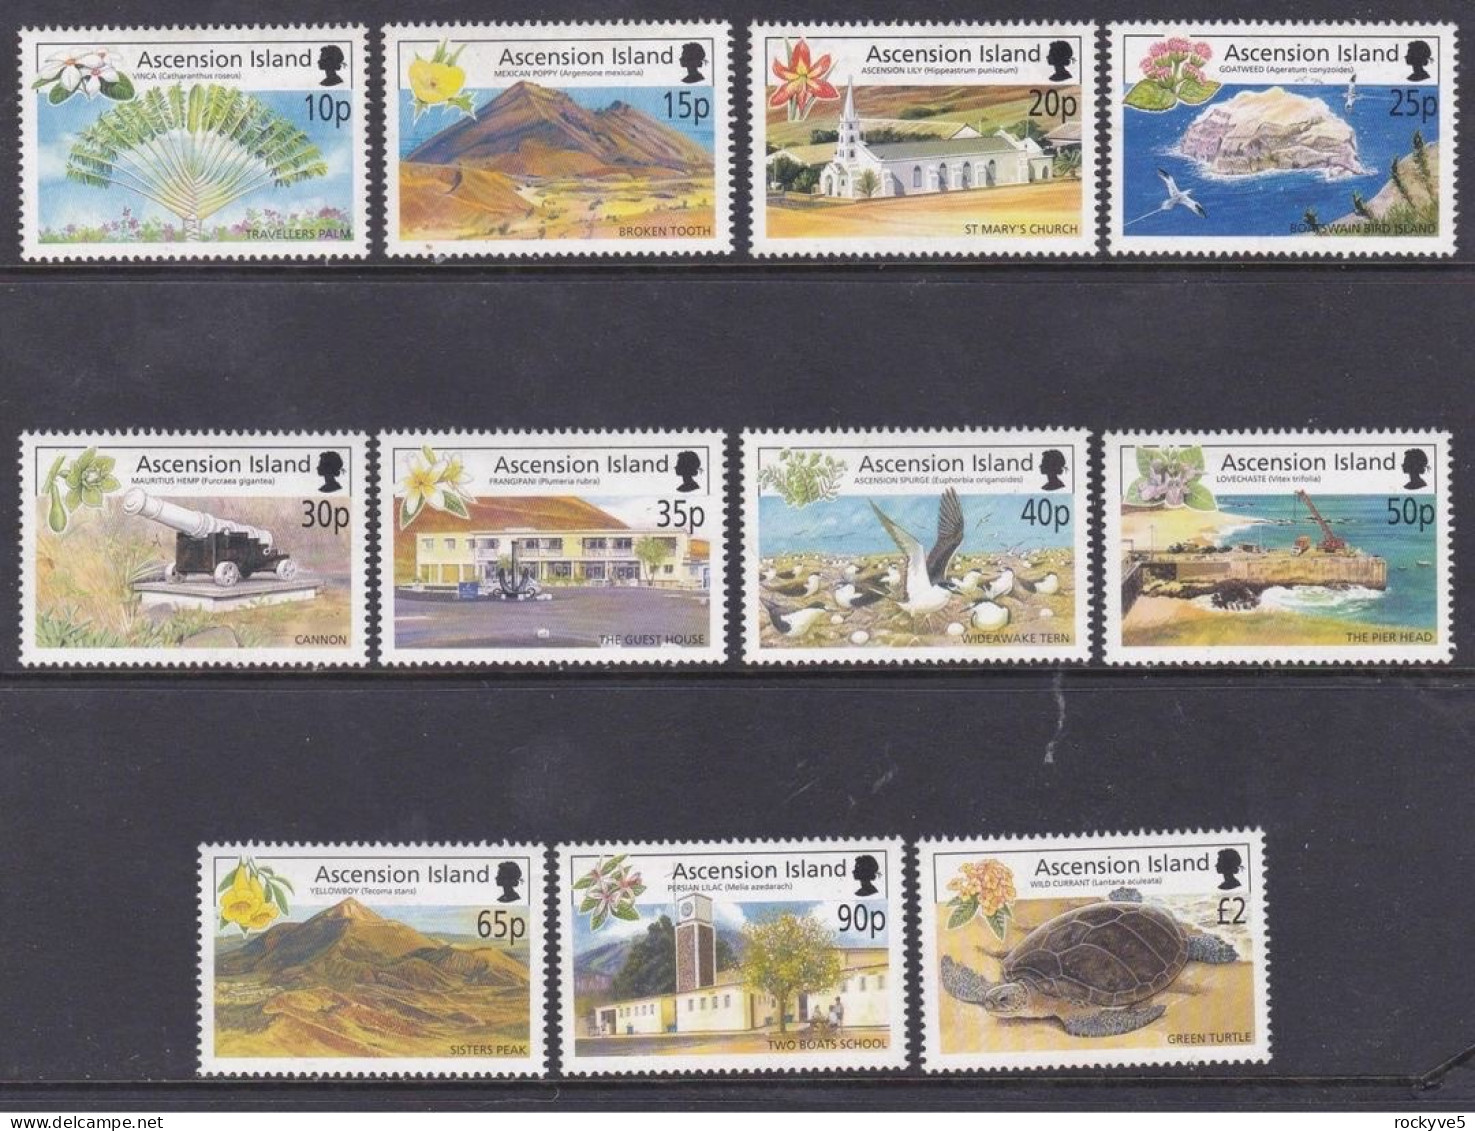 Ascension Island 2002 Island Views Definitives To £2 MNH CV £28 SP £9.99 - Ascensión